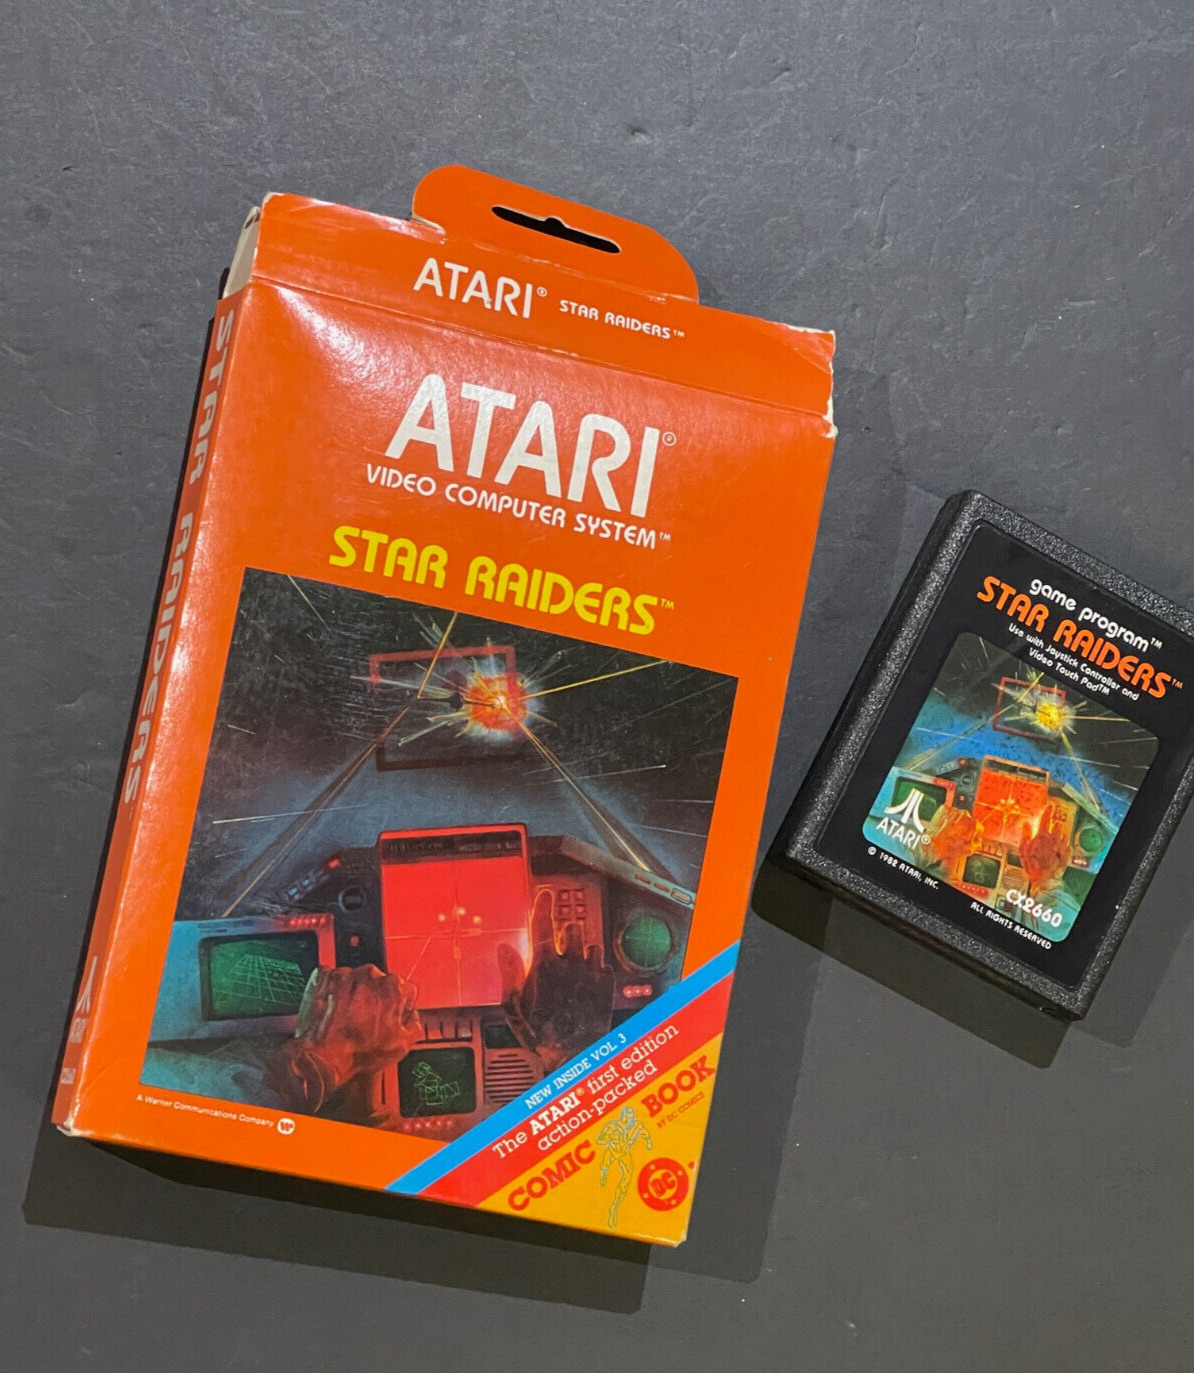 STAR RAIDERS ATARI GAME OPEN-BOX CX2660 UOS 1982 LAST ONE